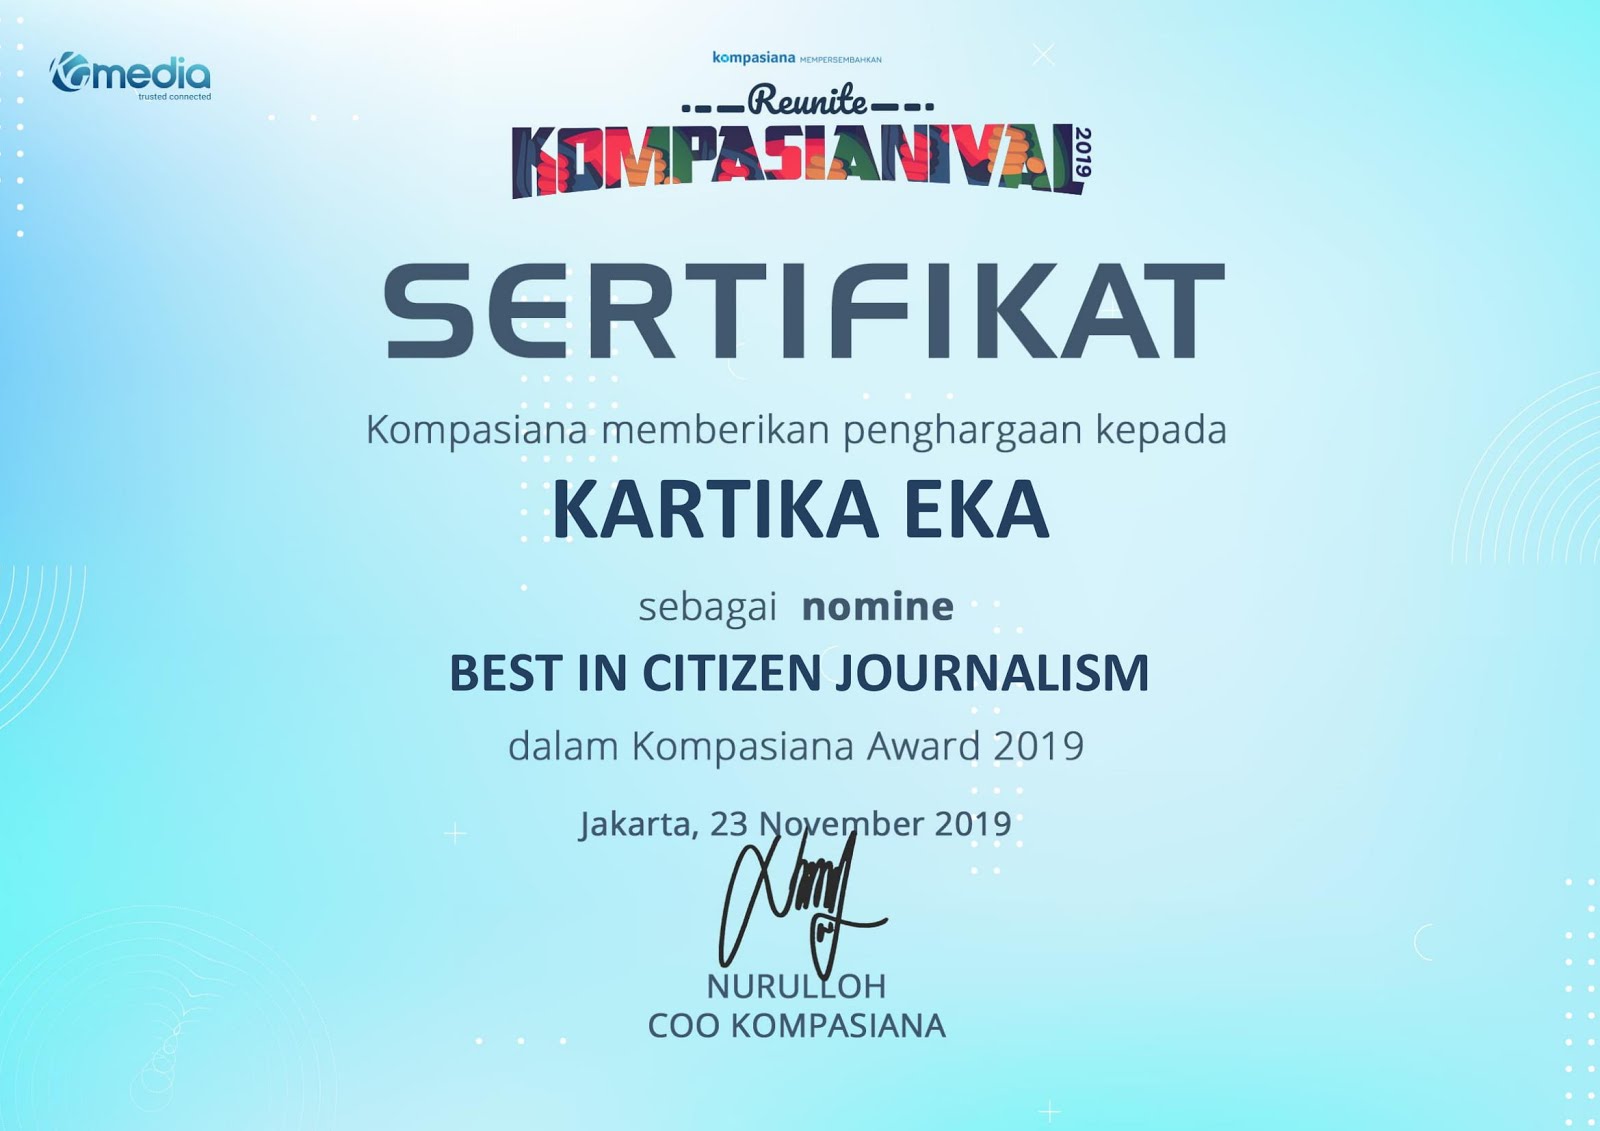 d'best citizen journalism nominee